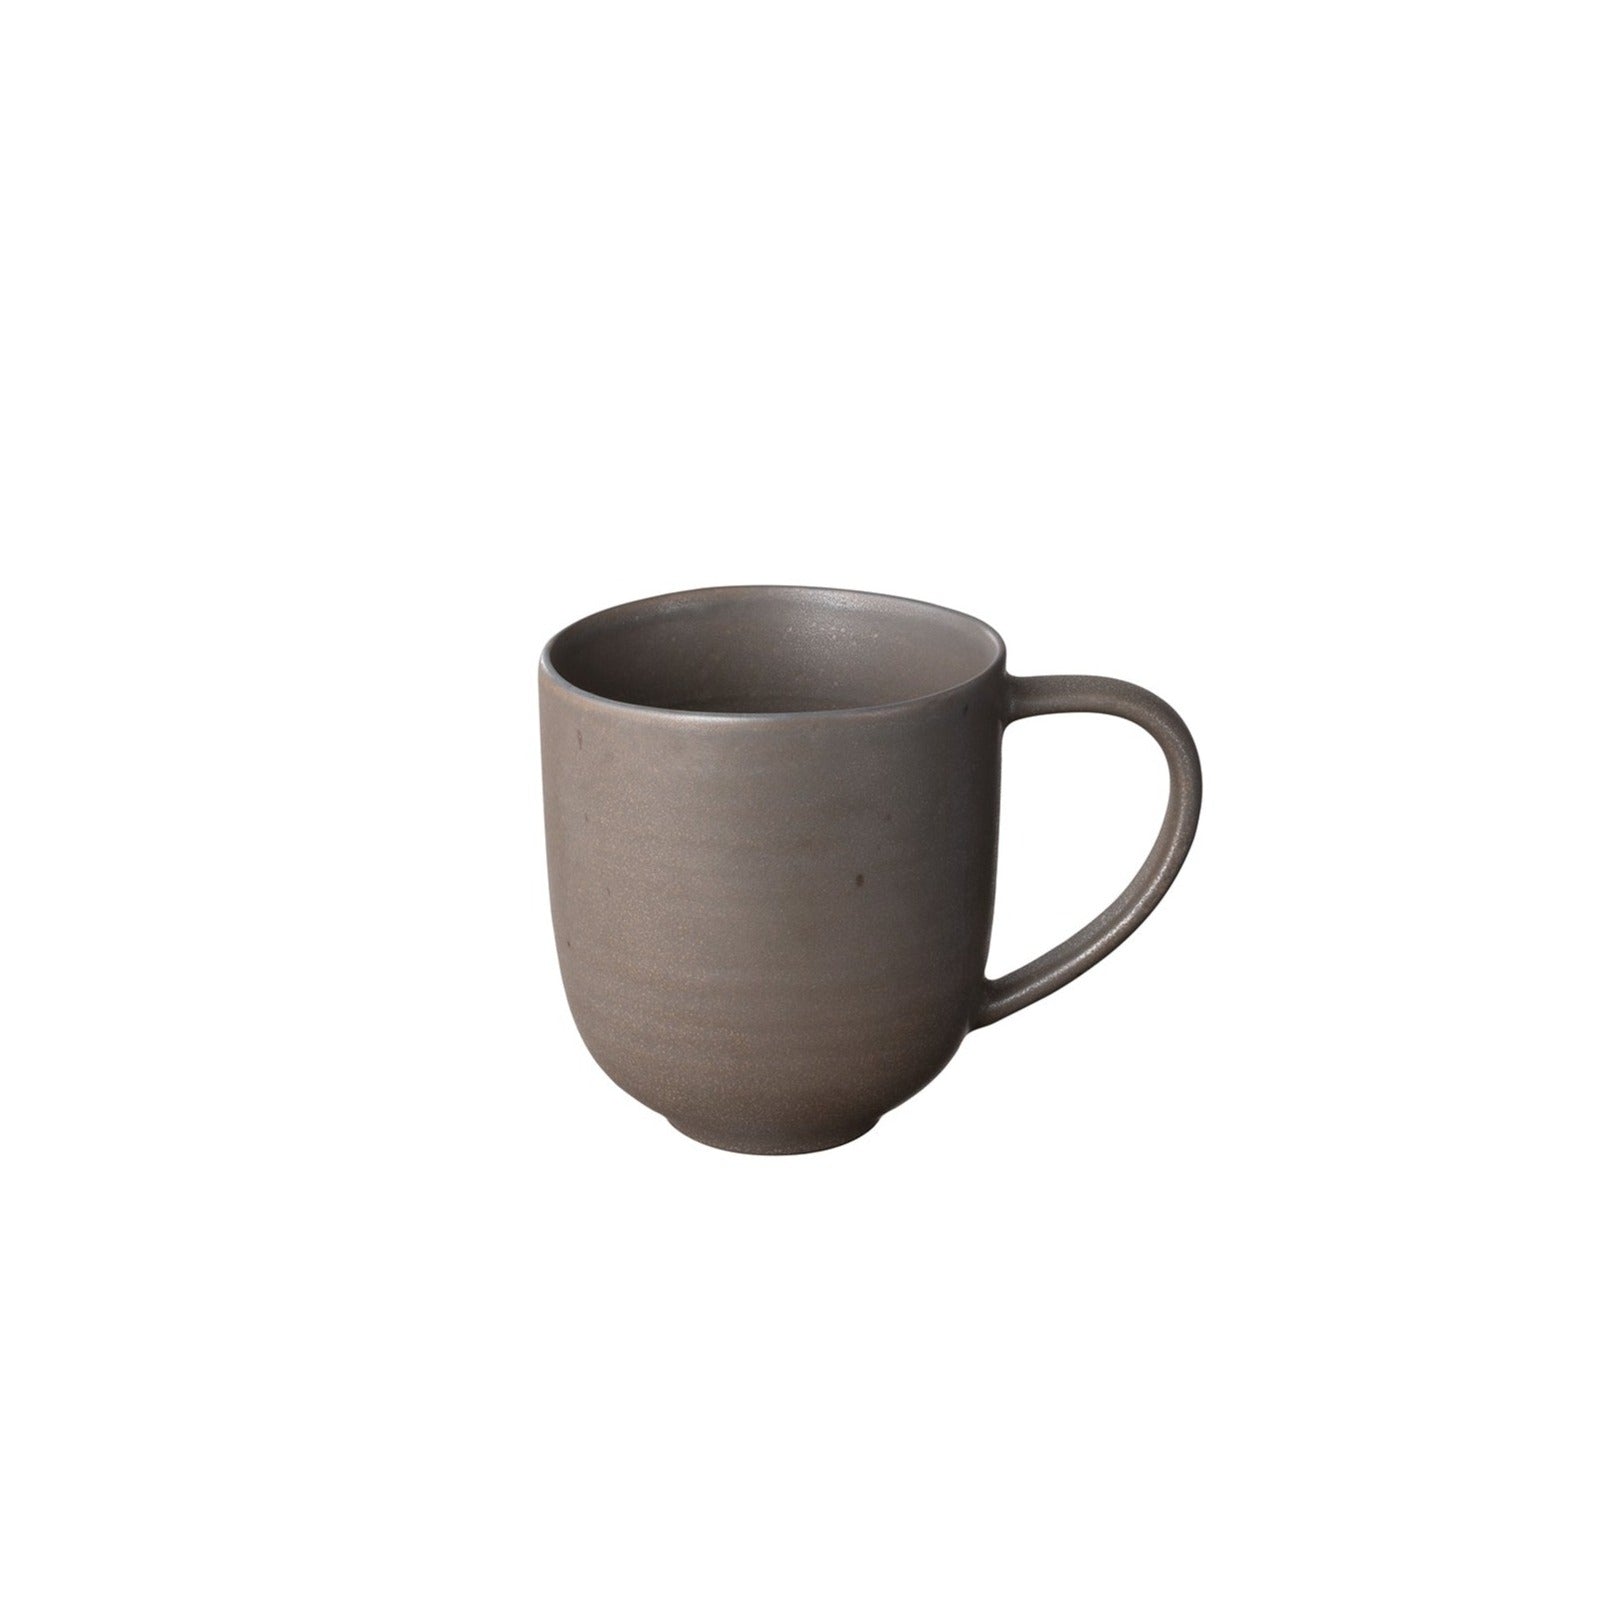 KUMI Stoneware Mug with Handle 9.8oz - Espresso